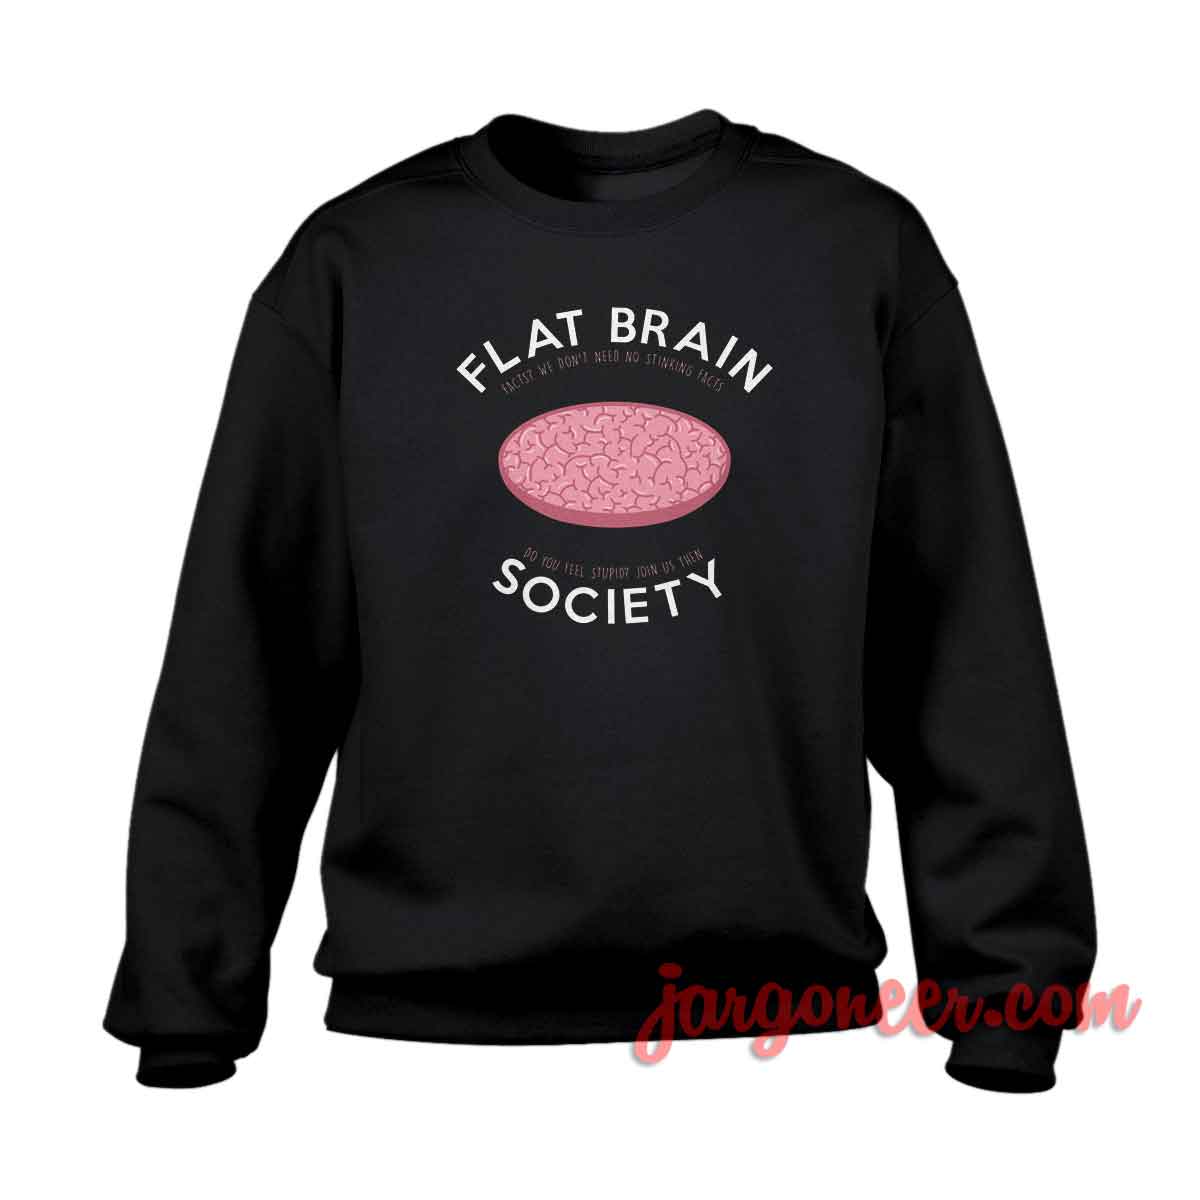 Flat Brain Society - Shop Unique Graphic Cool Shirt Designs